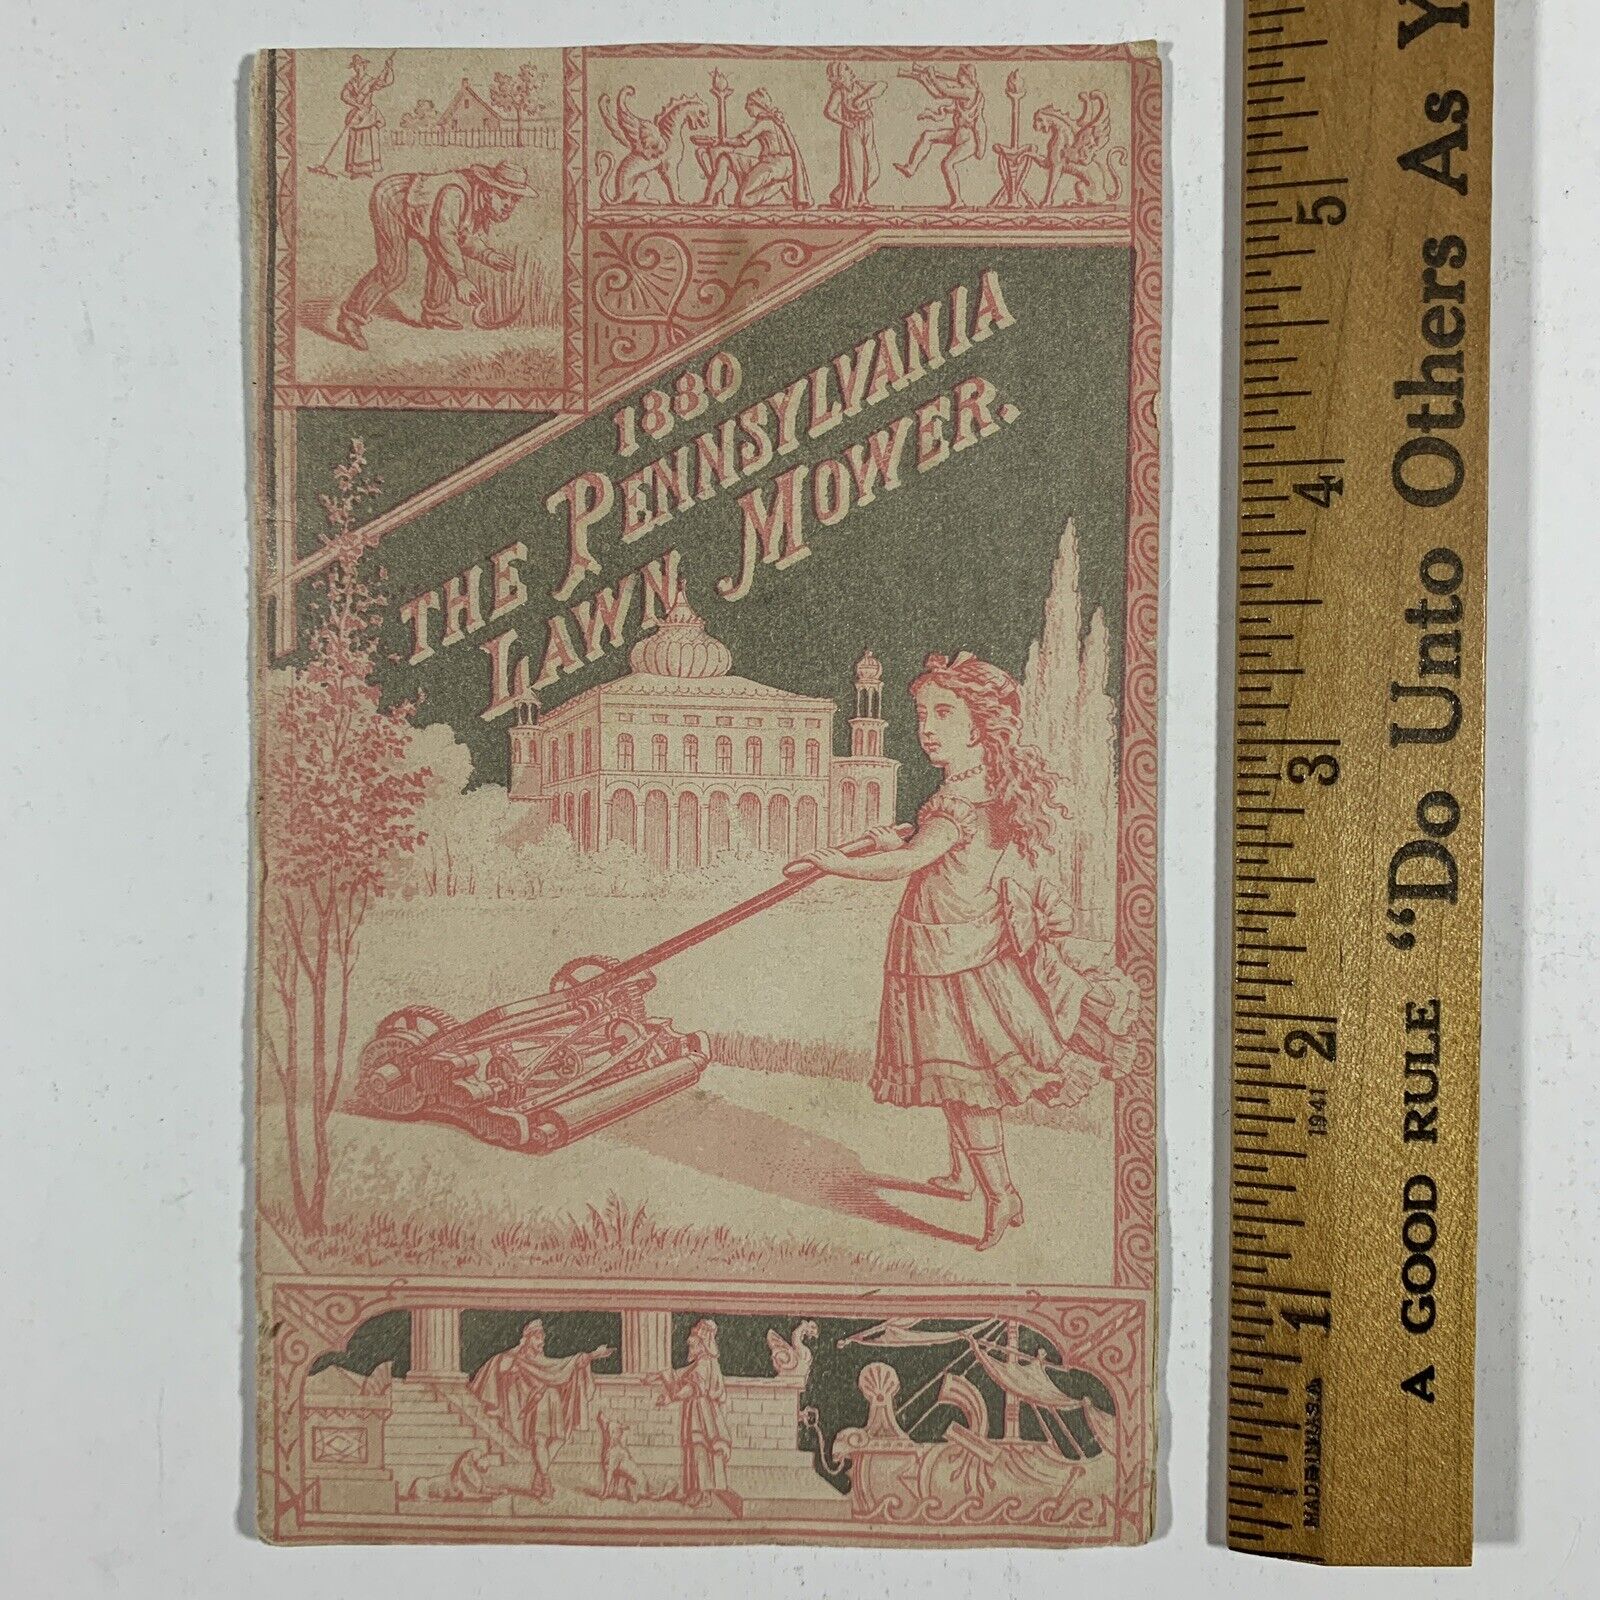 PENNSYLVANIA LAWN MOWER Victorian Trade Card. 1880